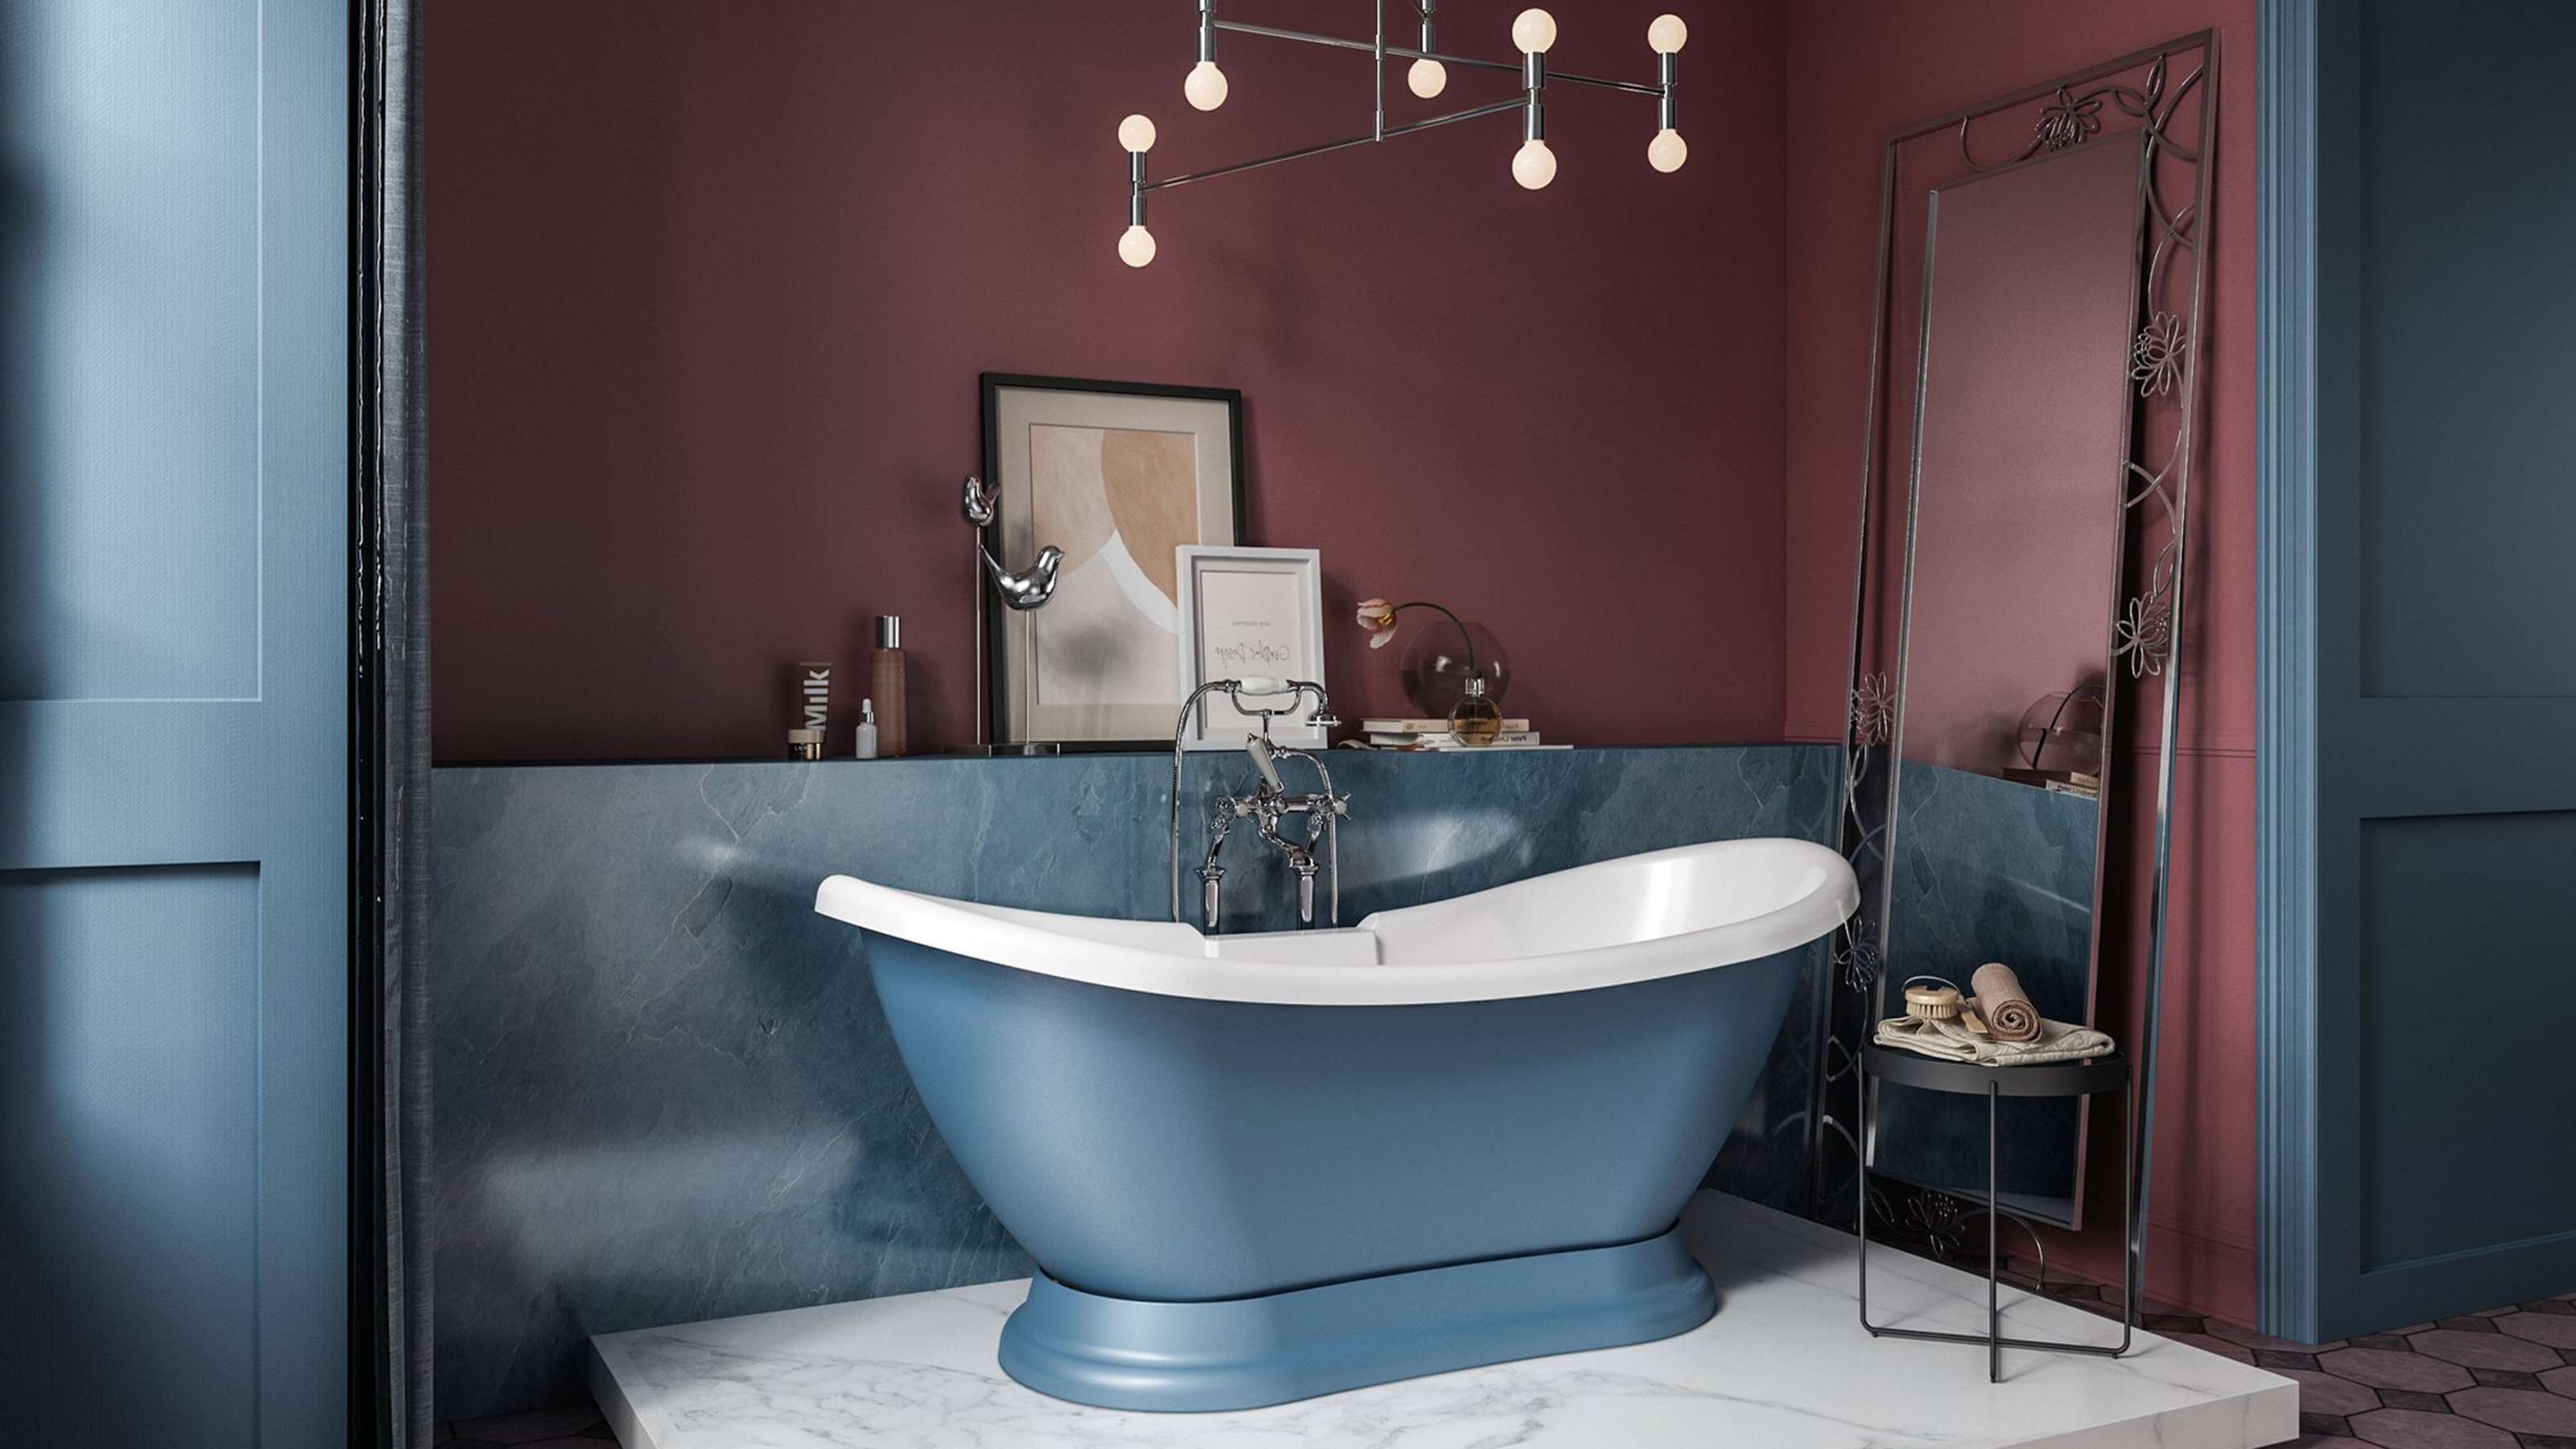 Bathroom Design Inspiration - Brass Accents Add A Glamorous